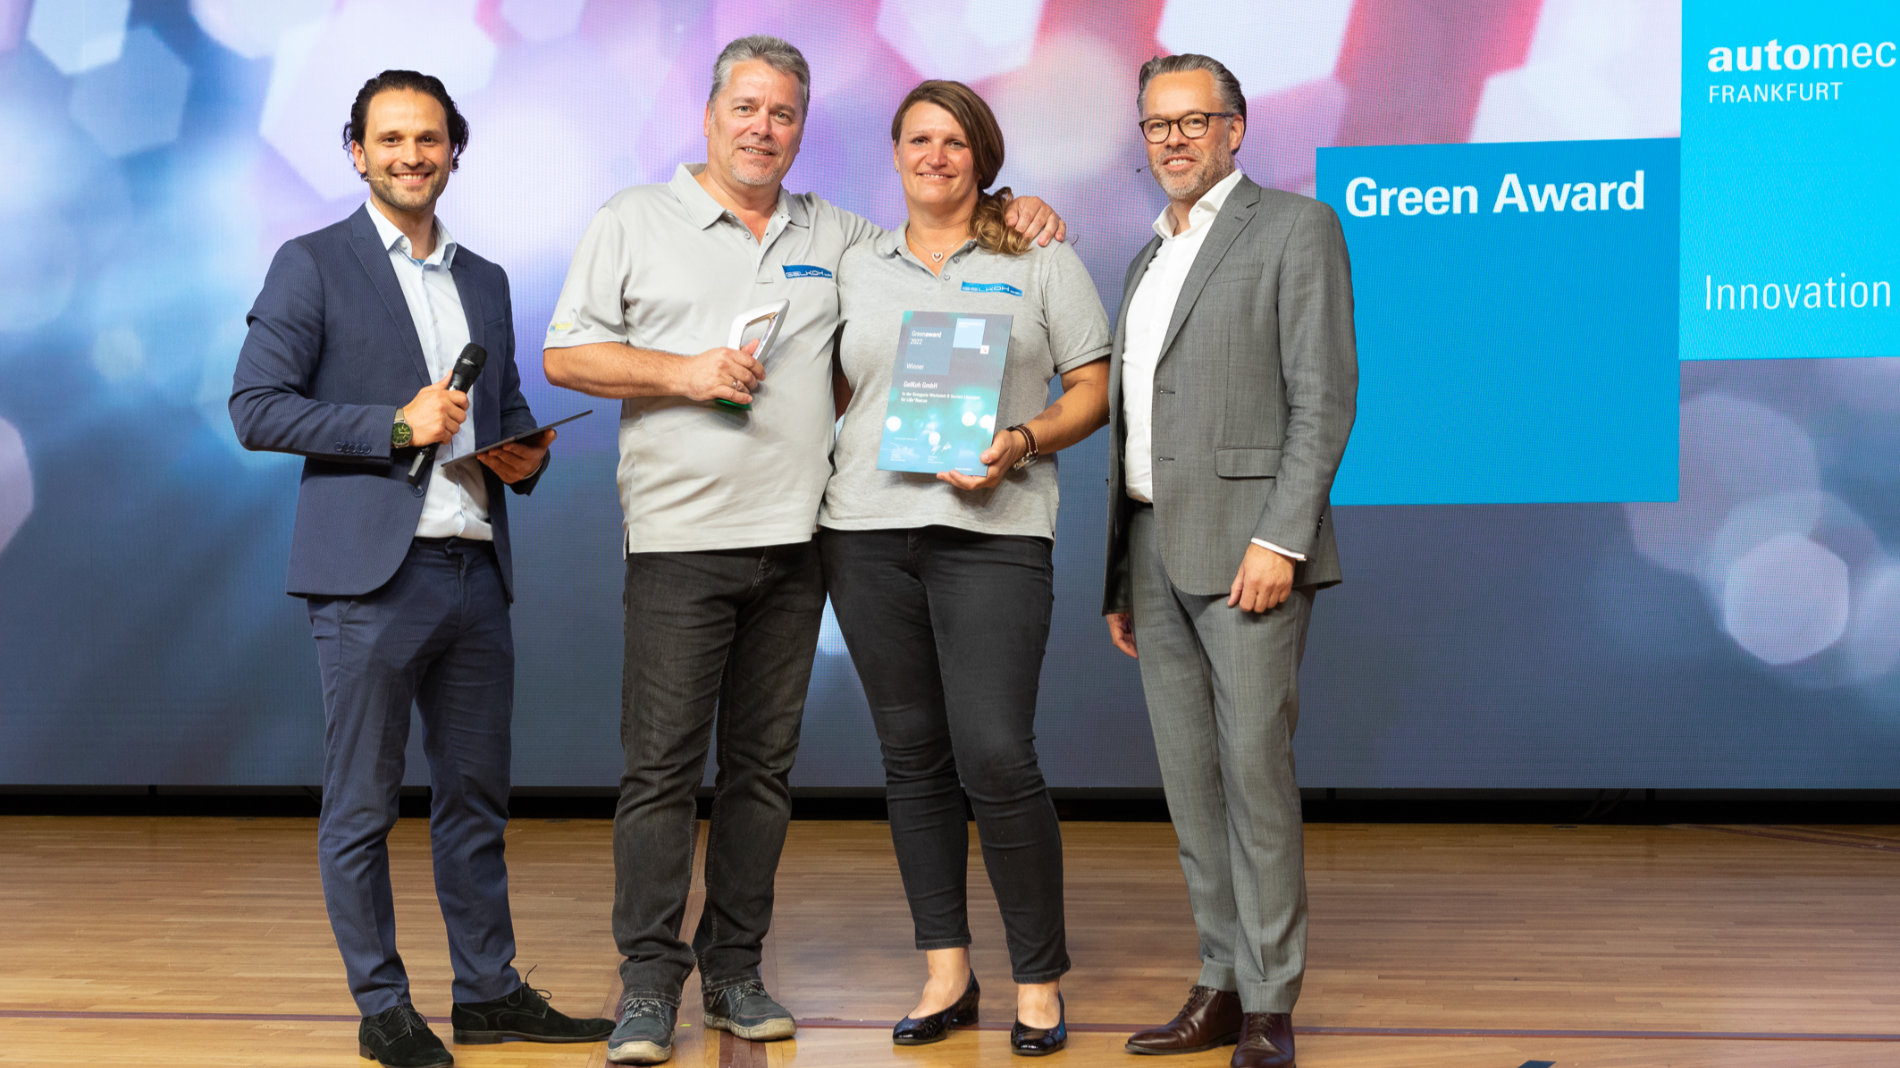 Automechanika Green Award